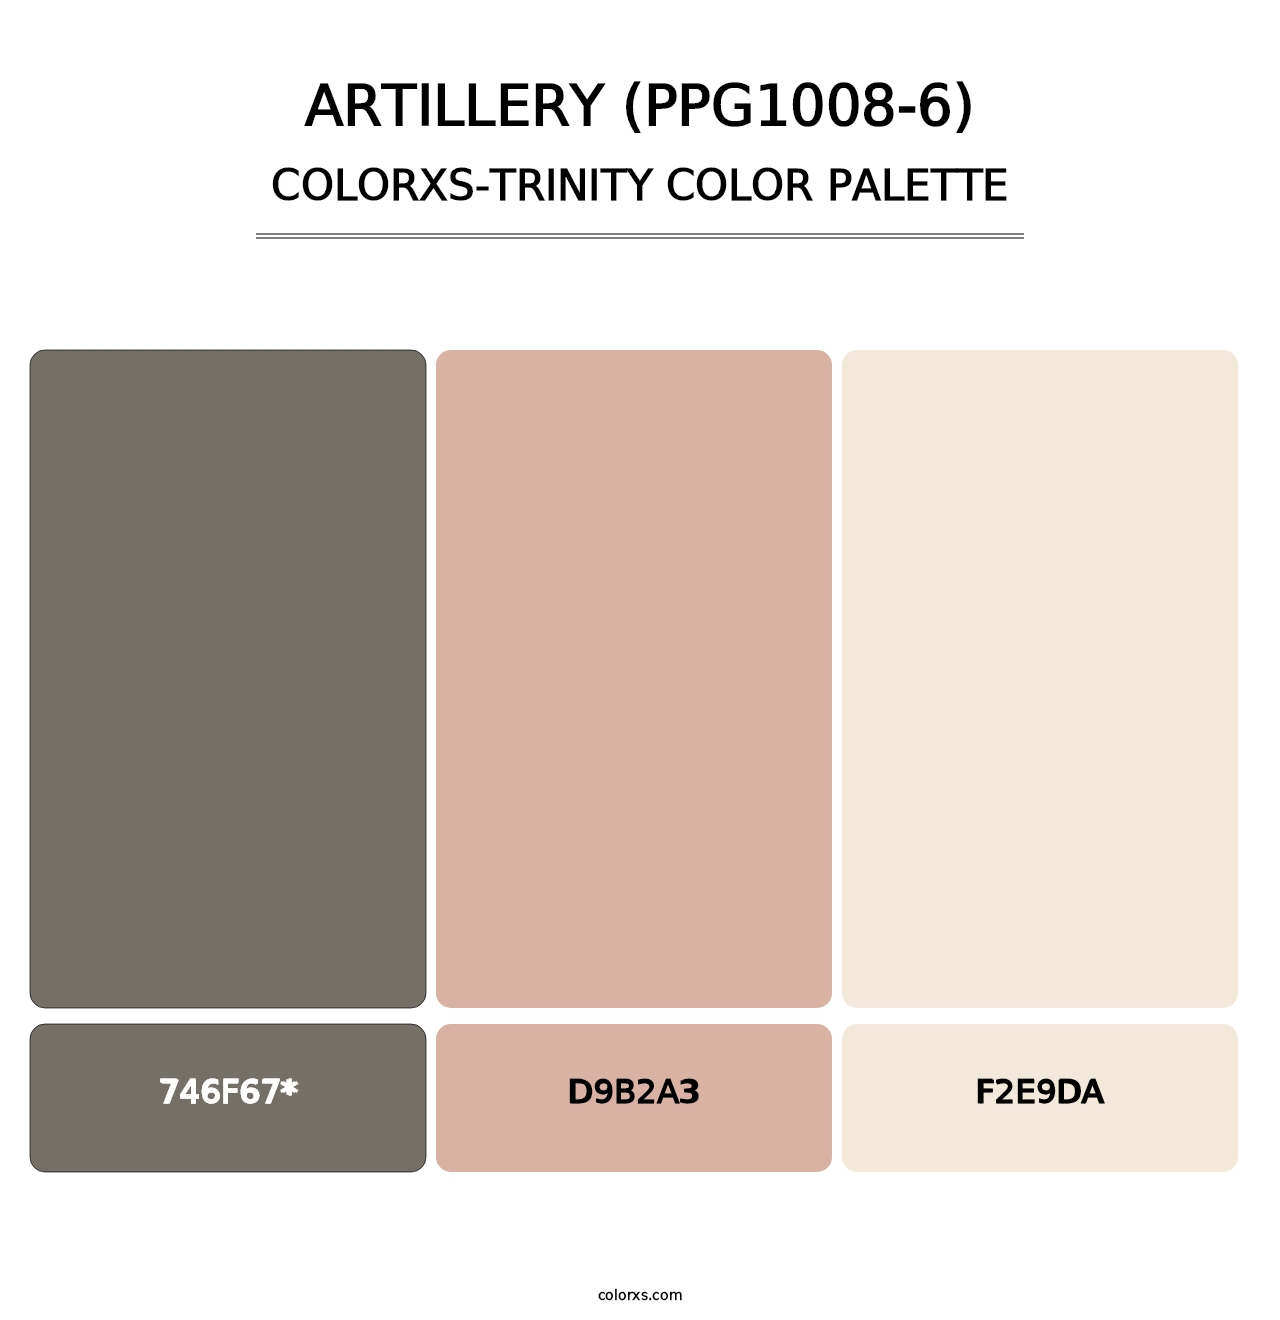 Artillery (PPG1008-6) - Colorxs Trinity Palette